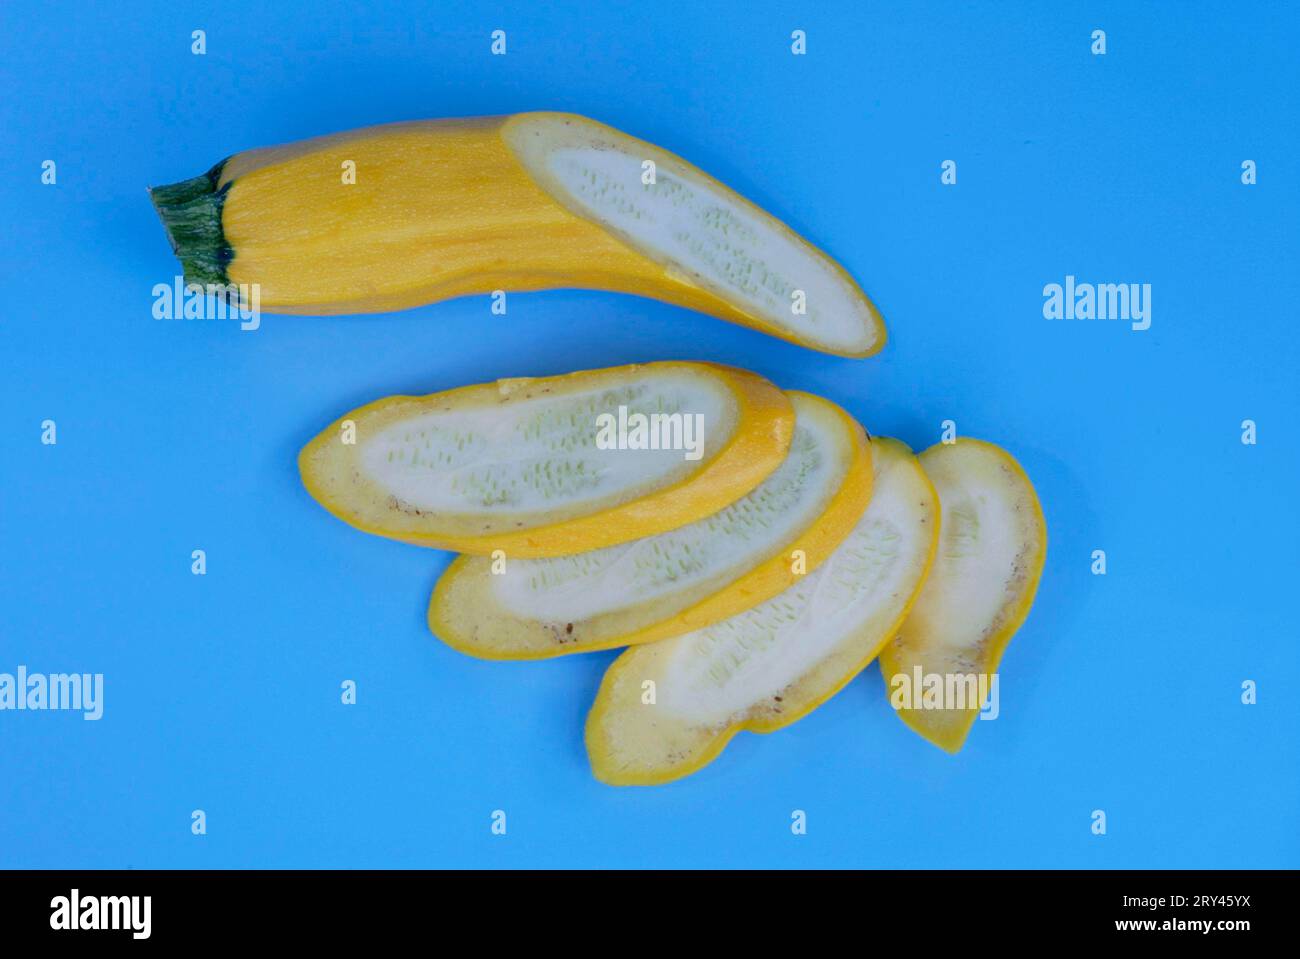 Courgettes (Cucurbita pepo var. giromontiina) Stock Photo